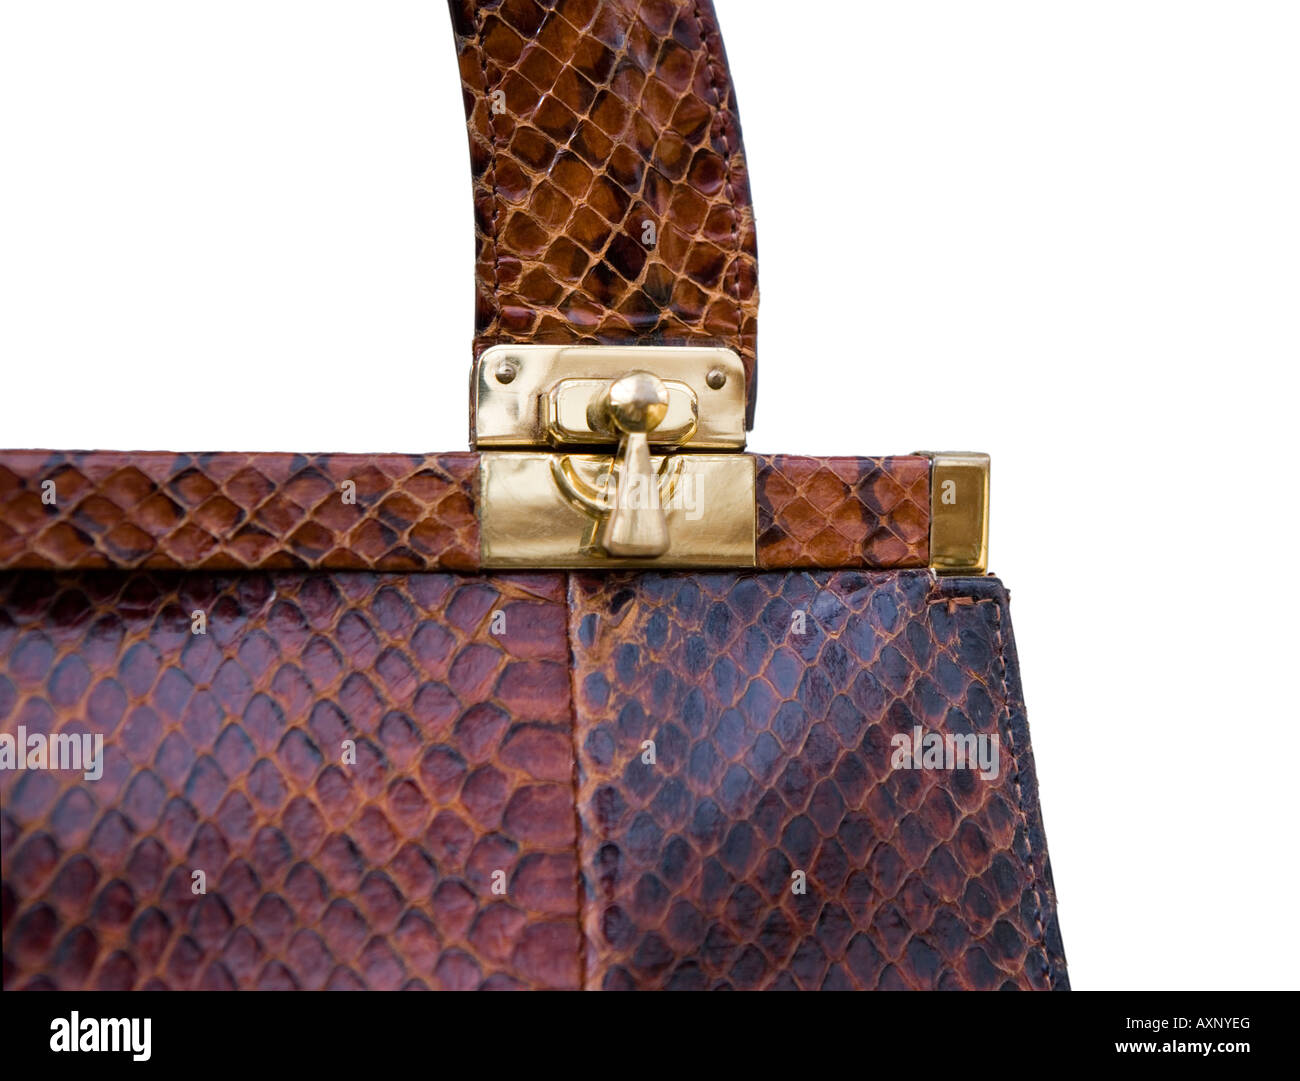 Snakeskin handbag hi-res stock photography and images - Alamy